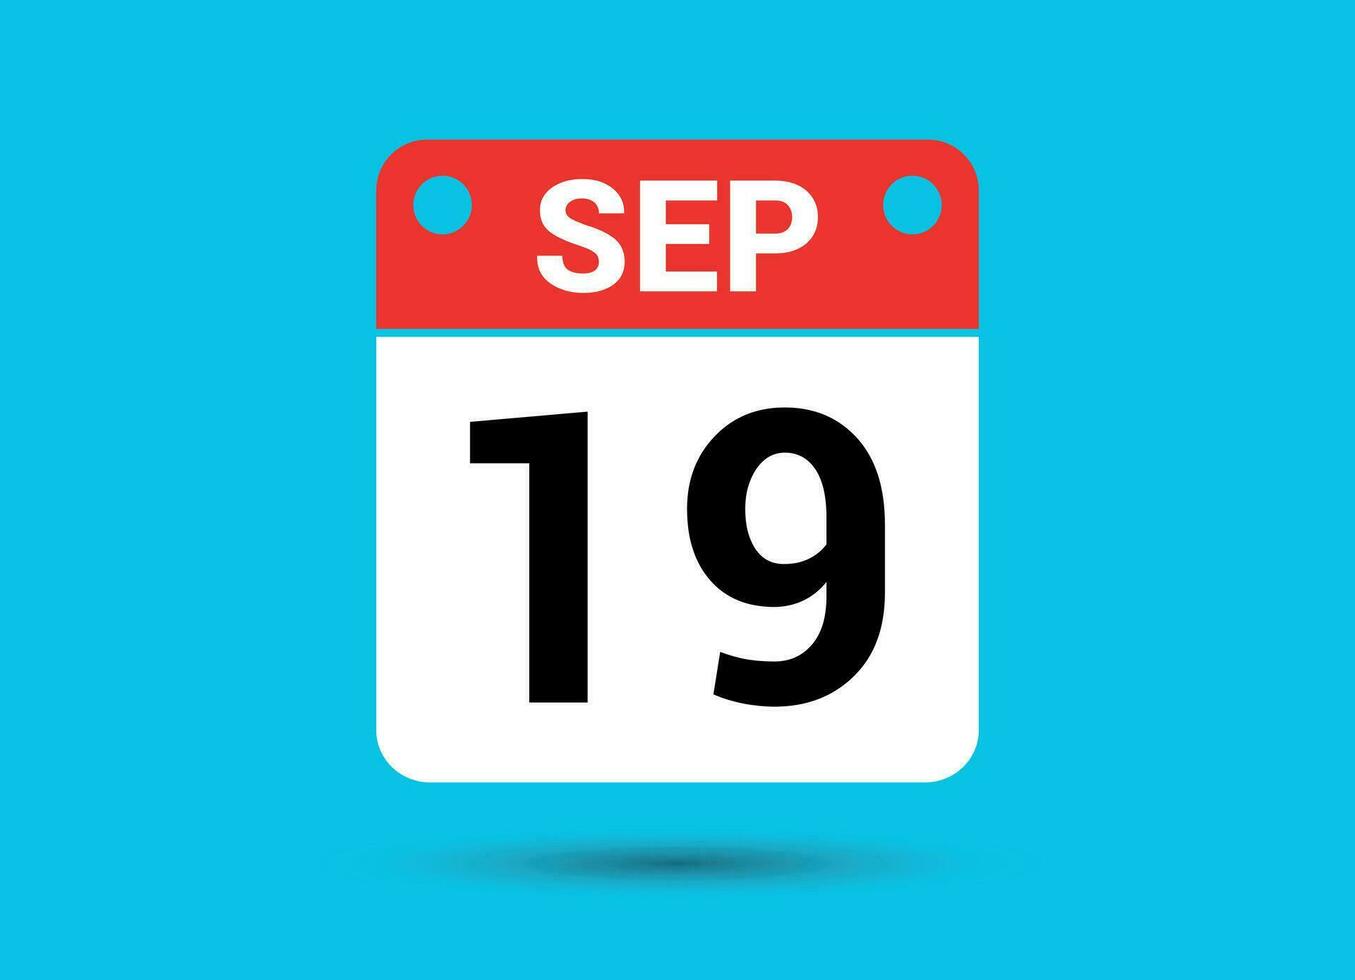 September 19 Calendar Date Flat Icon Day 19 Vector Illustration